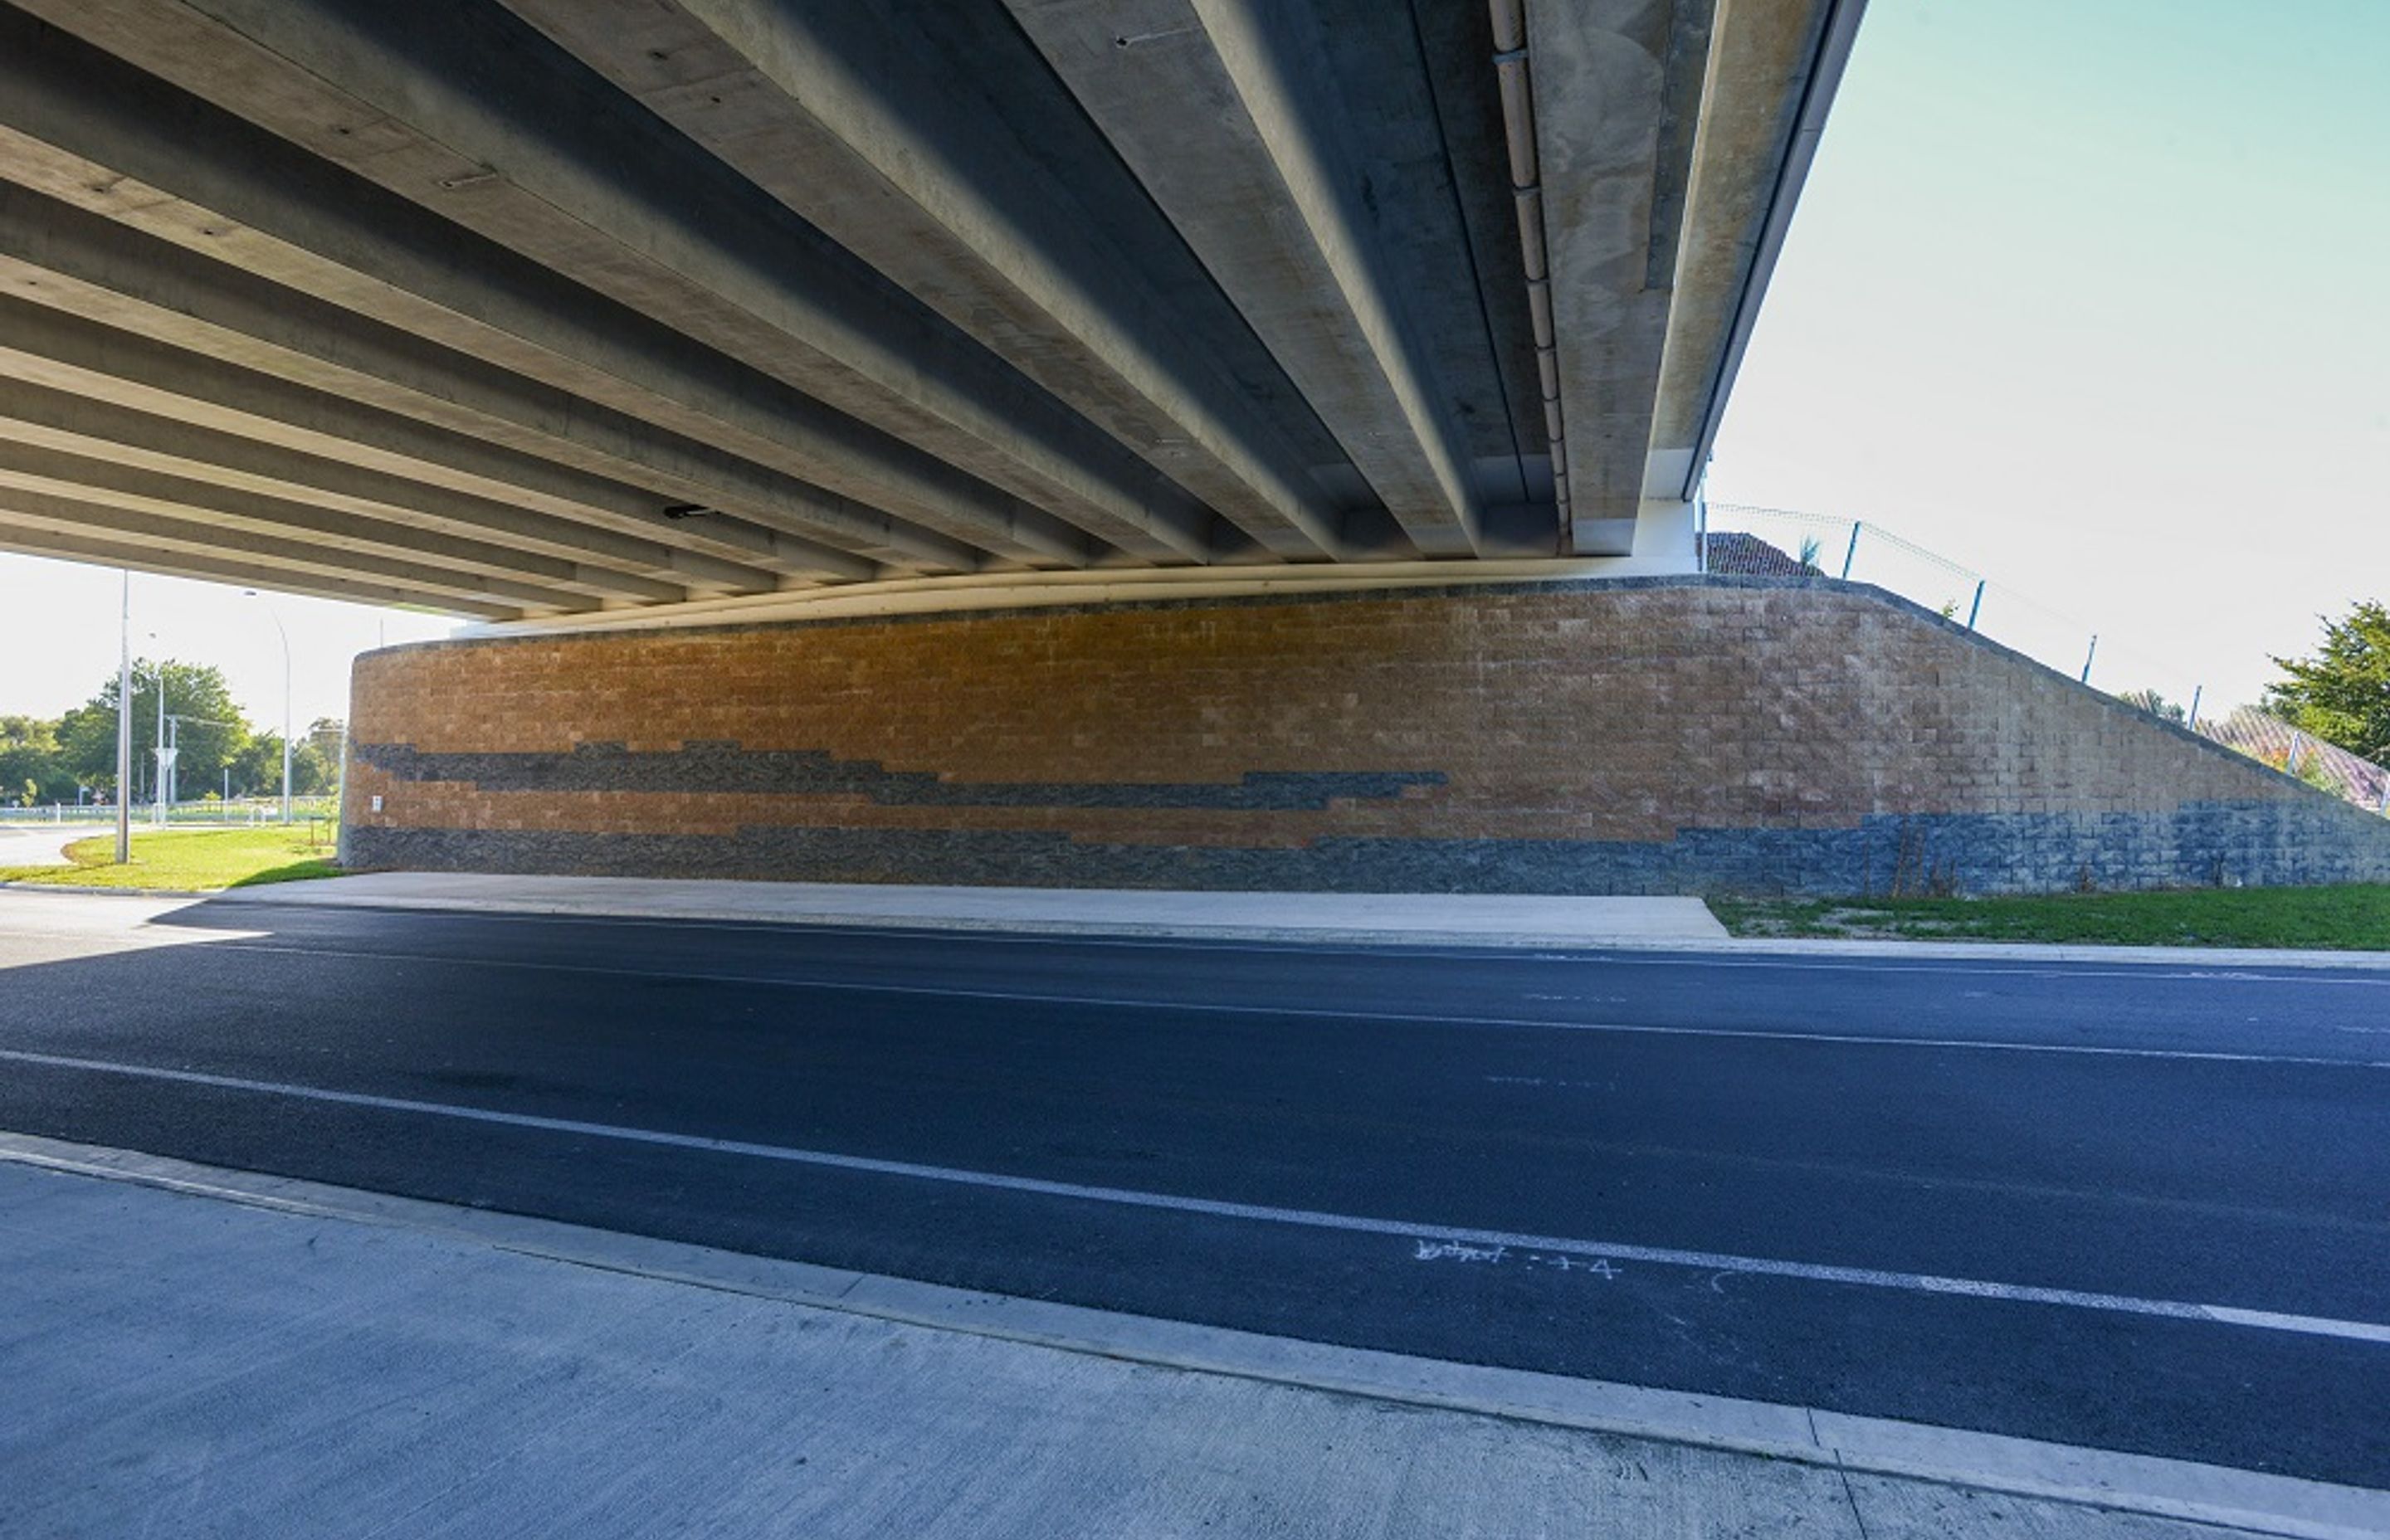 Cambridge Tamahere Expressway - Firth Keysteel® retaining wall system